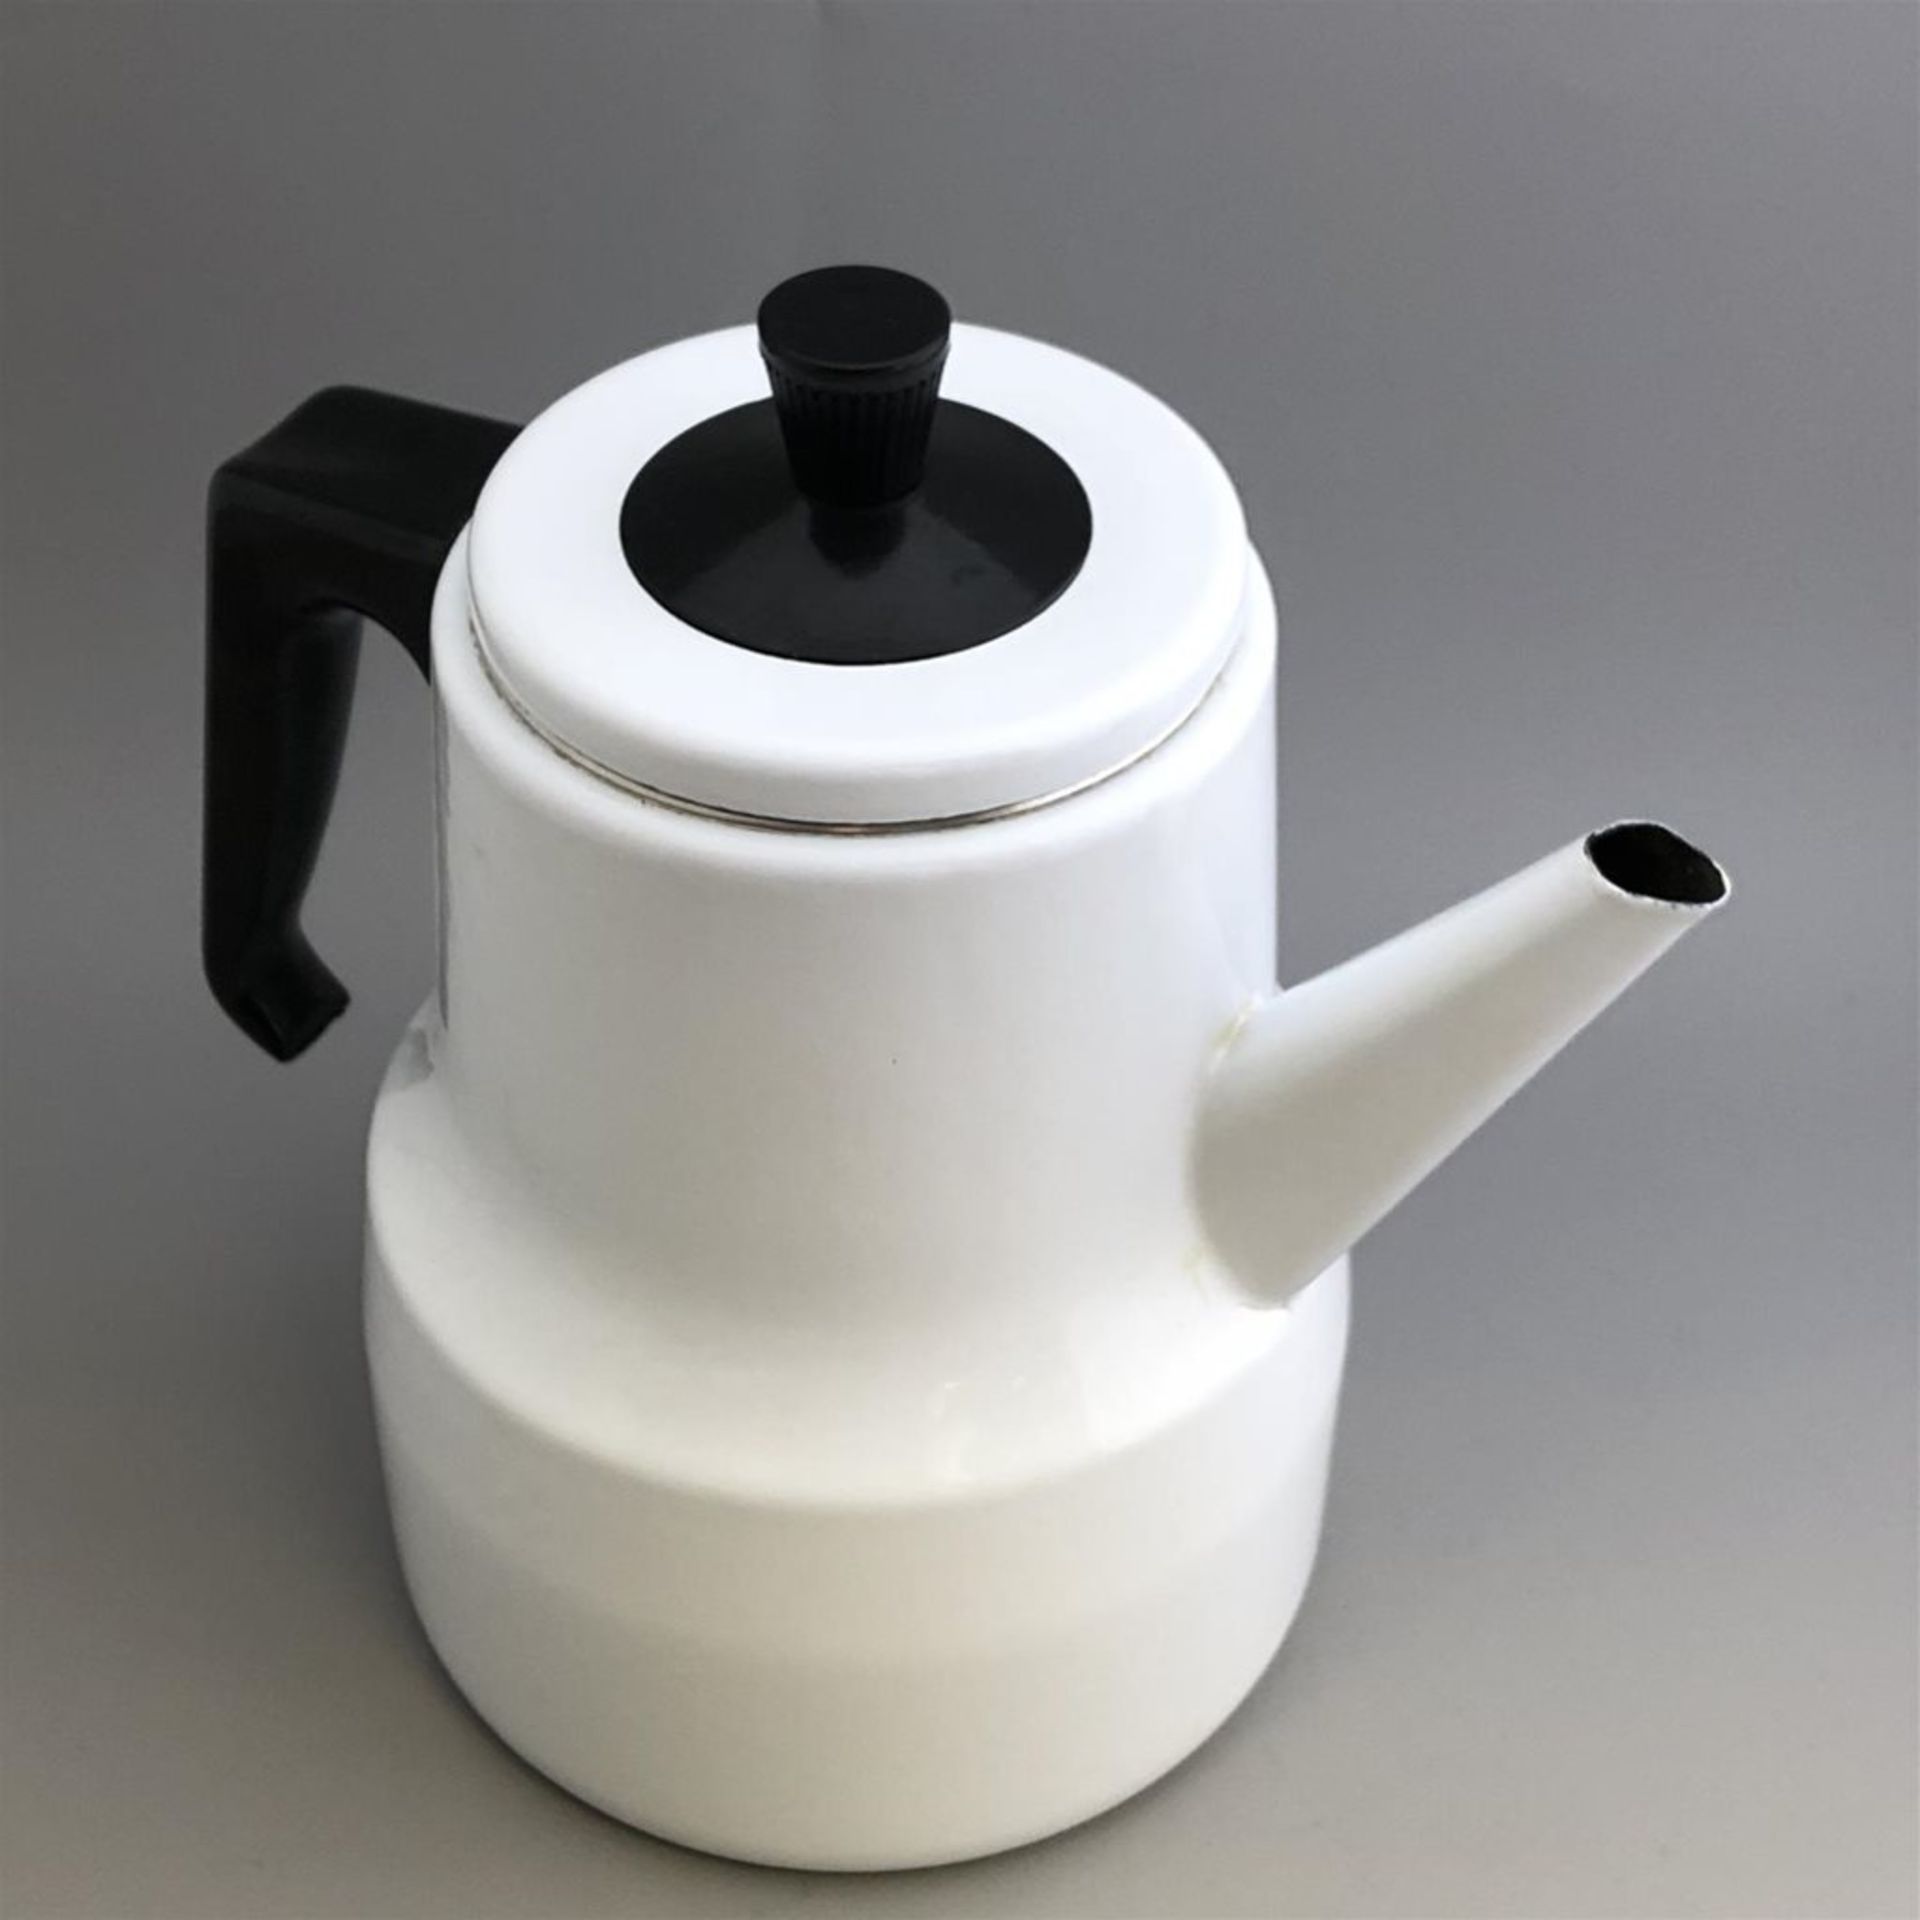 Scandinavian Design Enamel Coffee Pot - Unmarked - Image 4 of 4